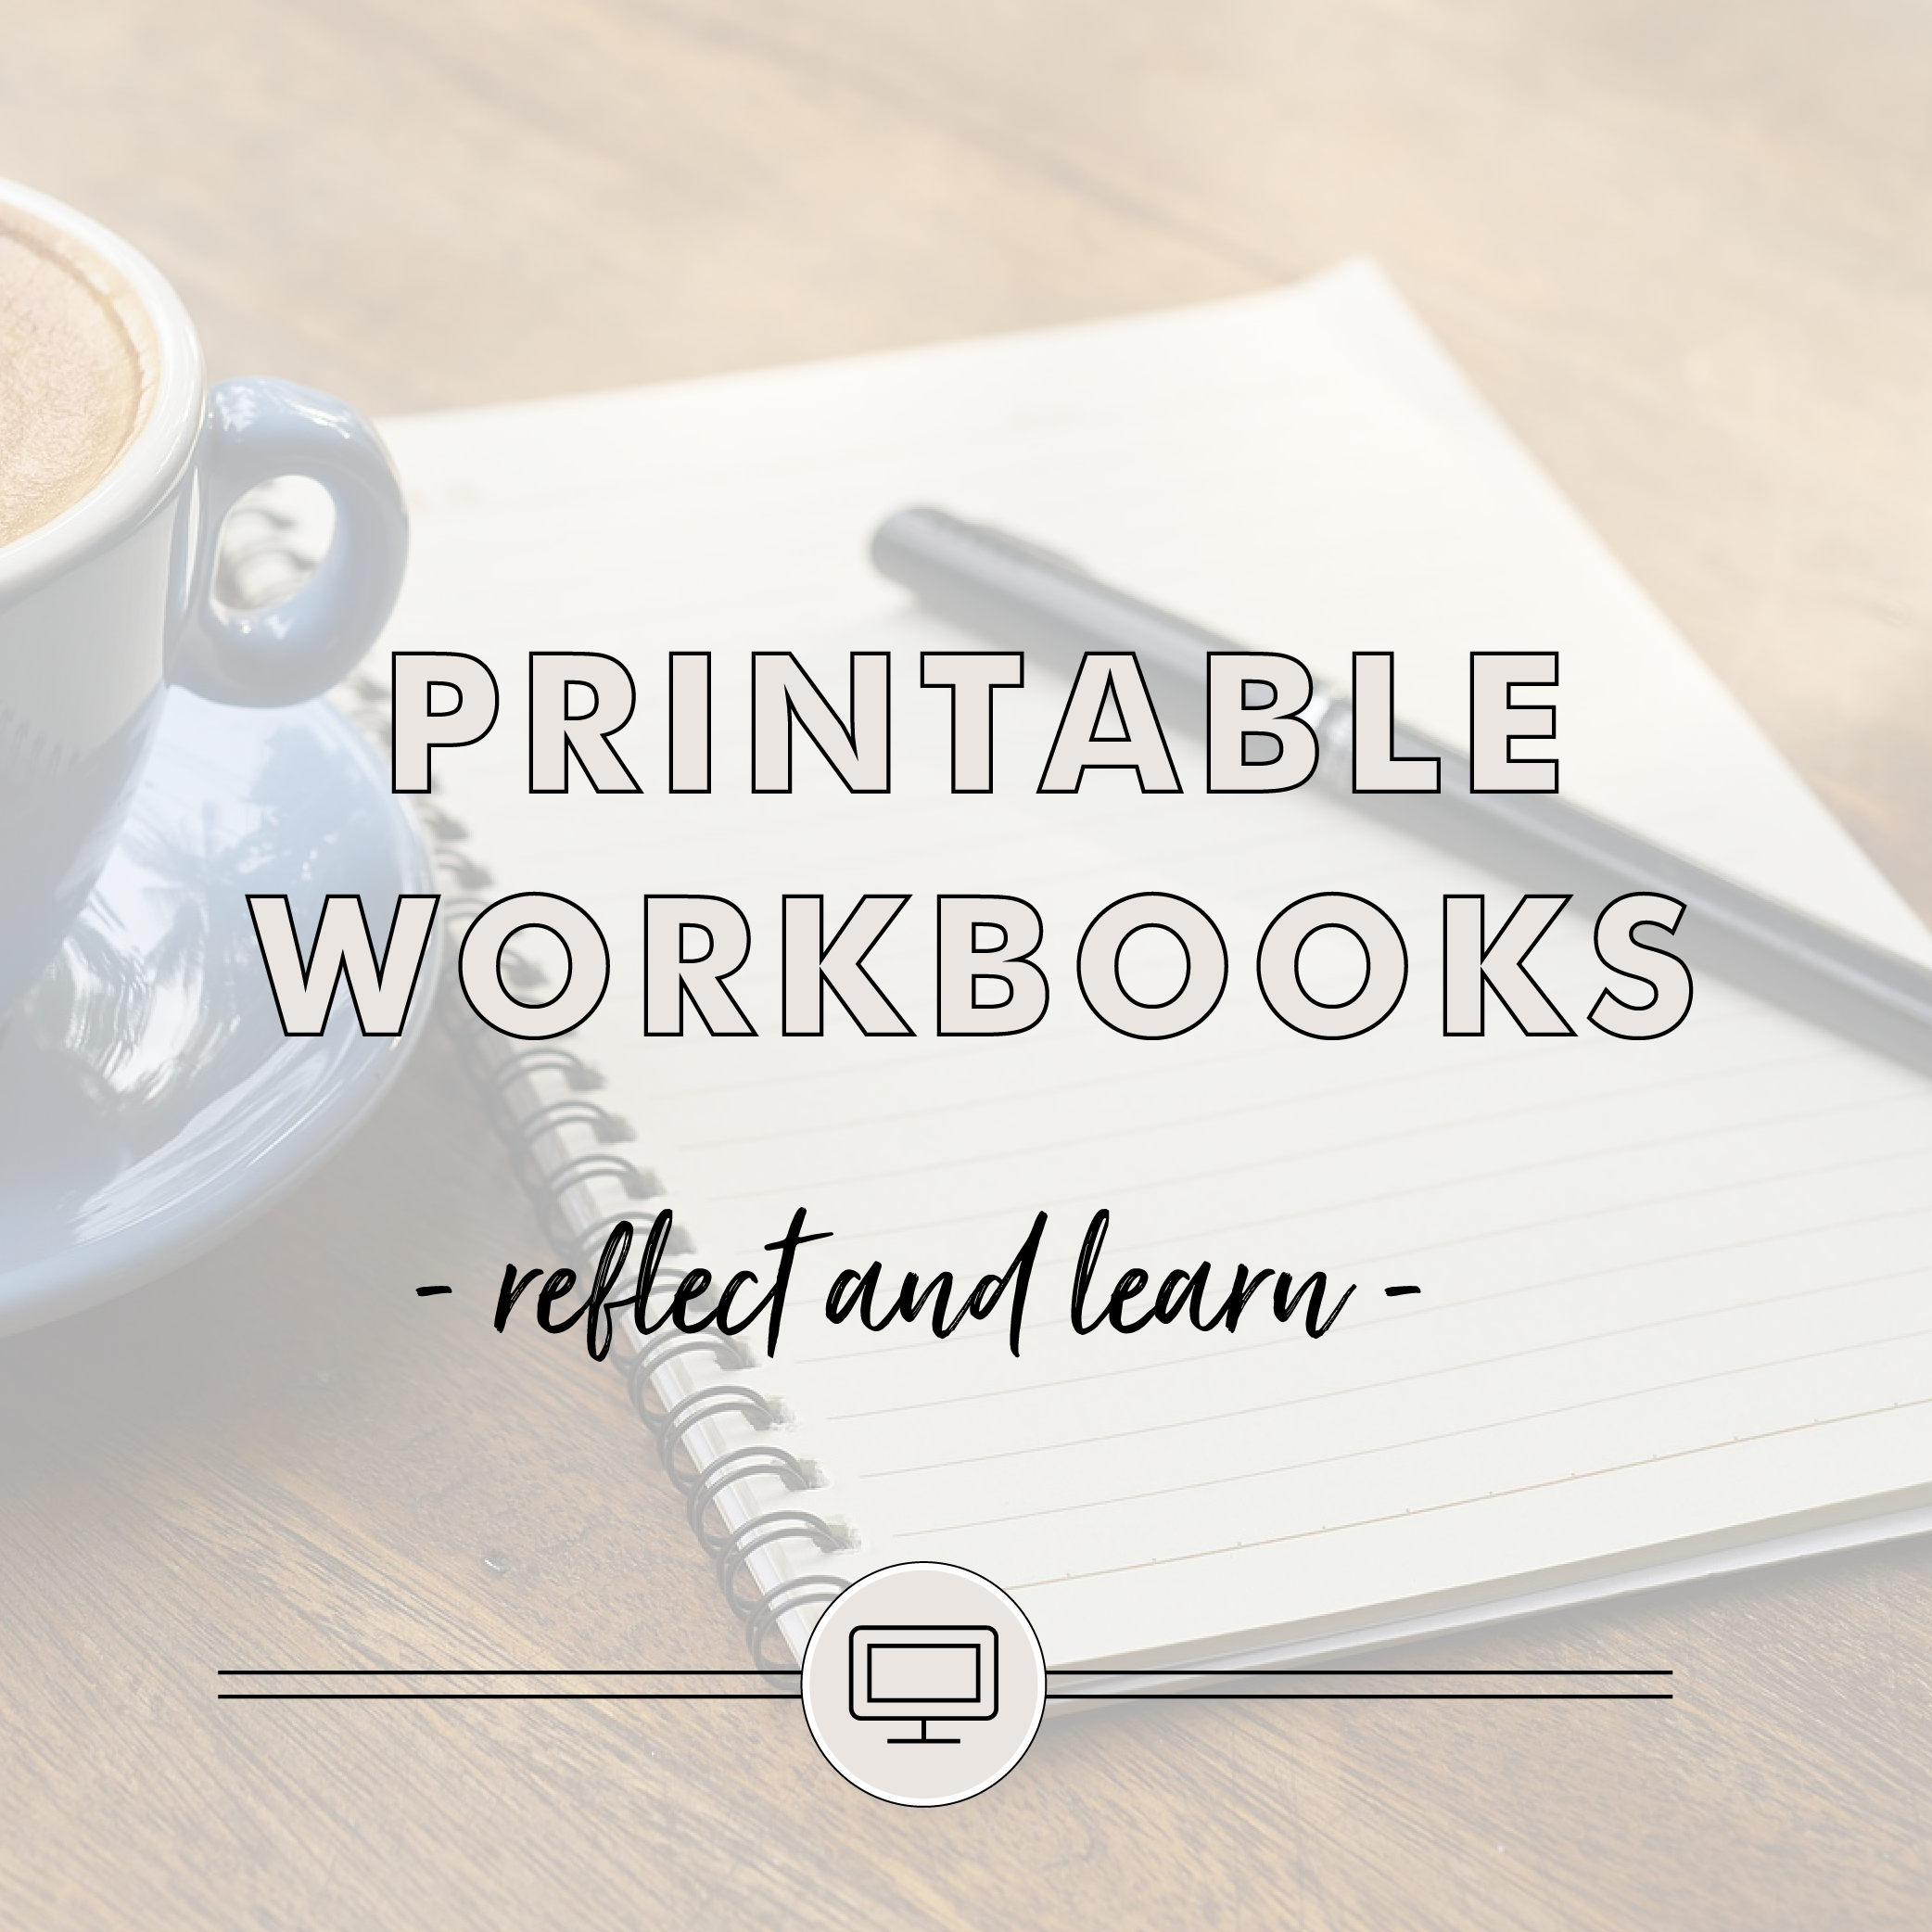 PRINTABLE WORKBOOKS-01.png